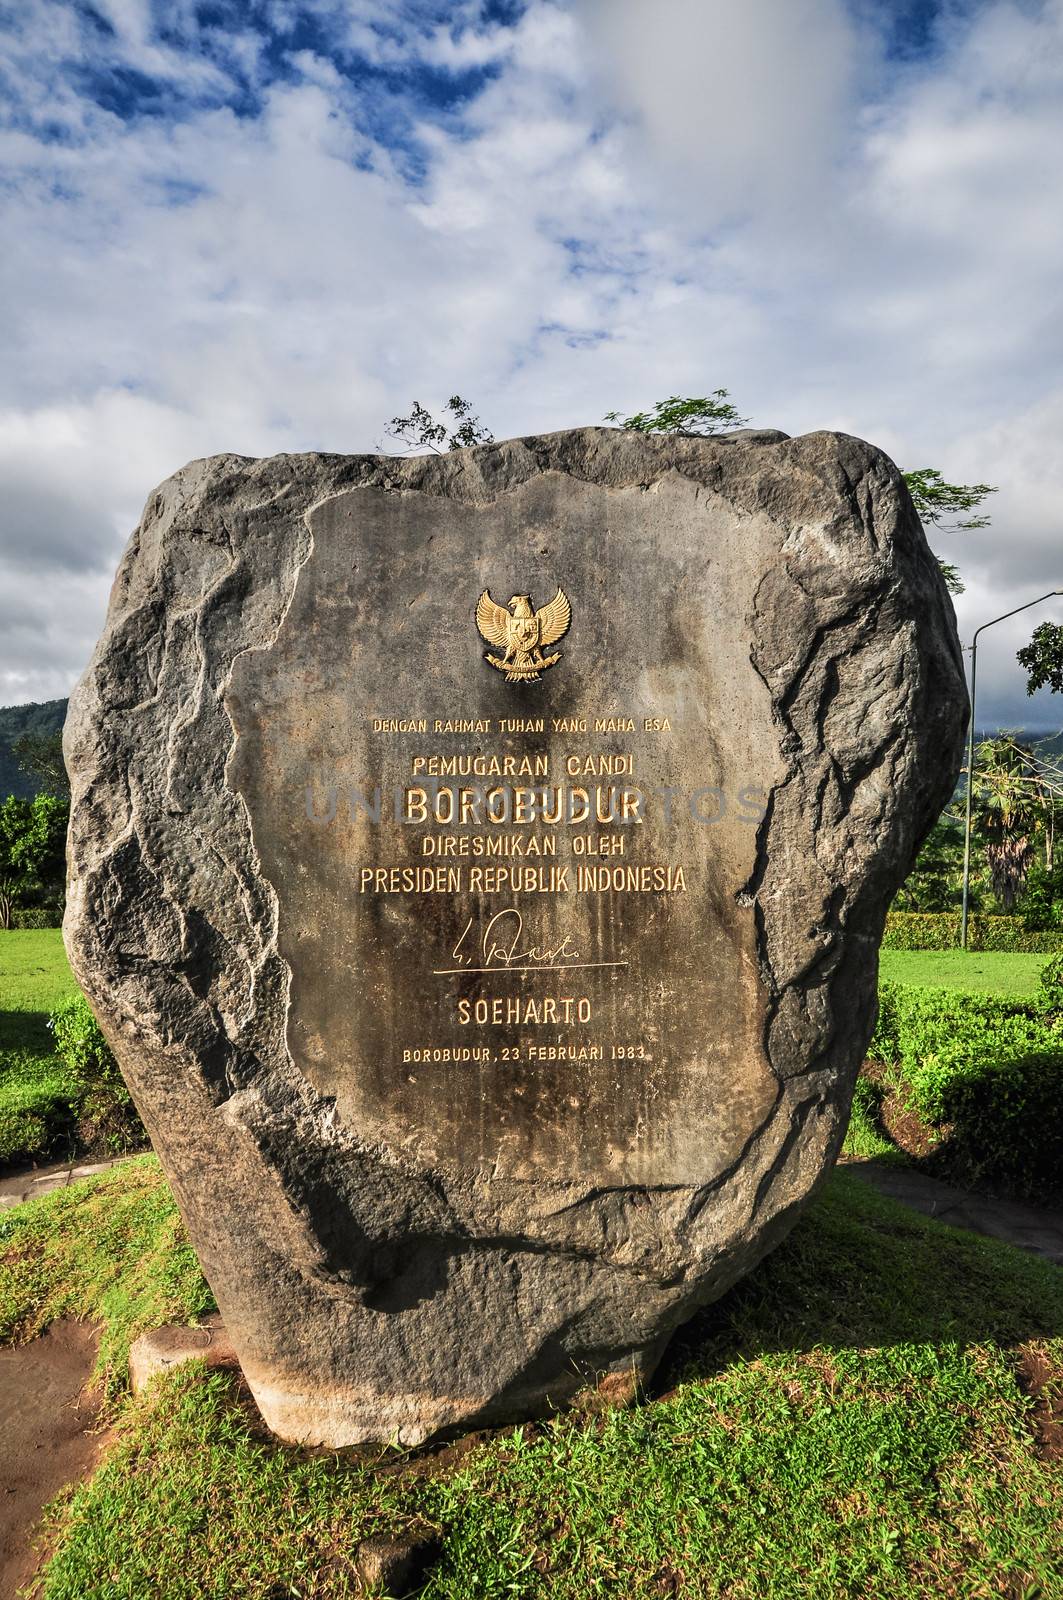 Buddist temple Borobudur Stone sign in Yogjakarta in Java by weltreisendertj